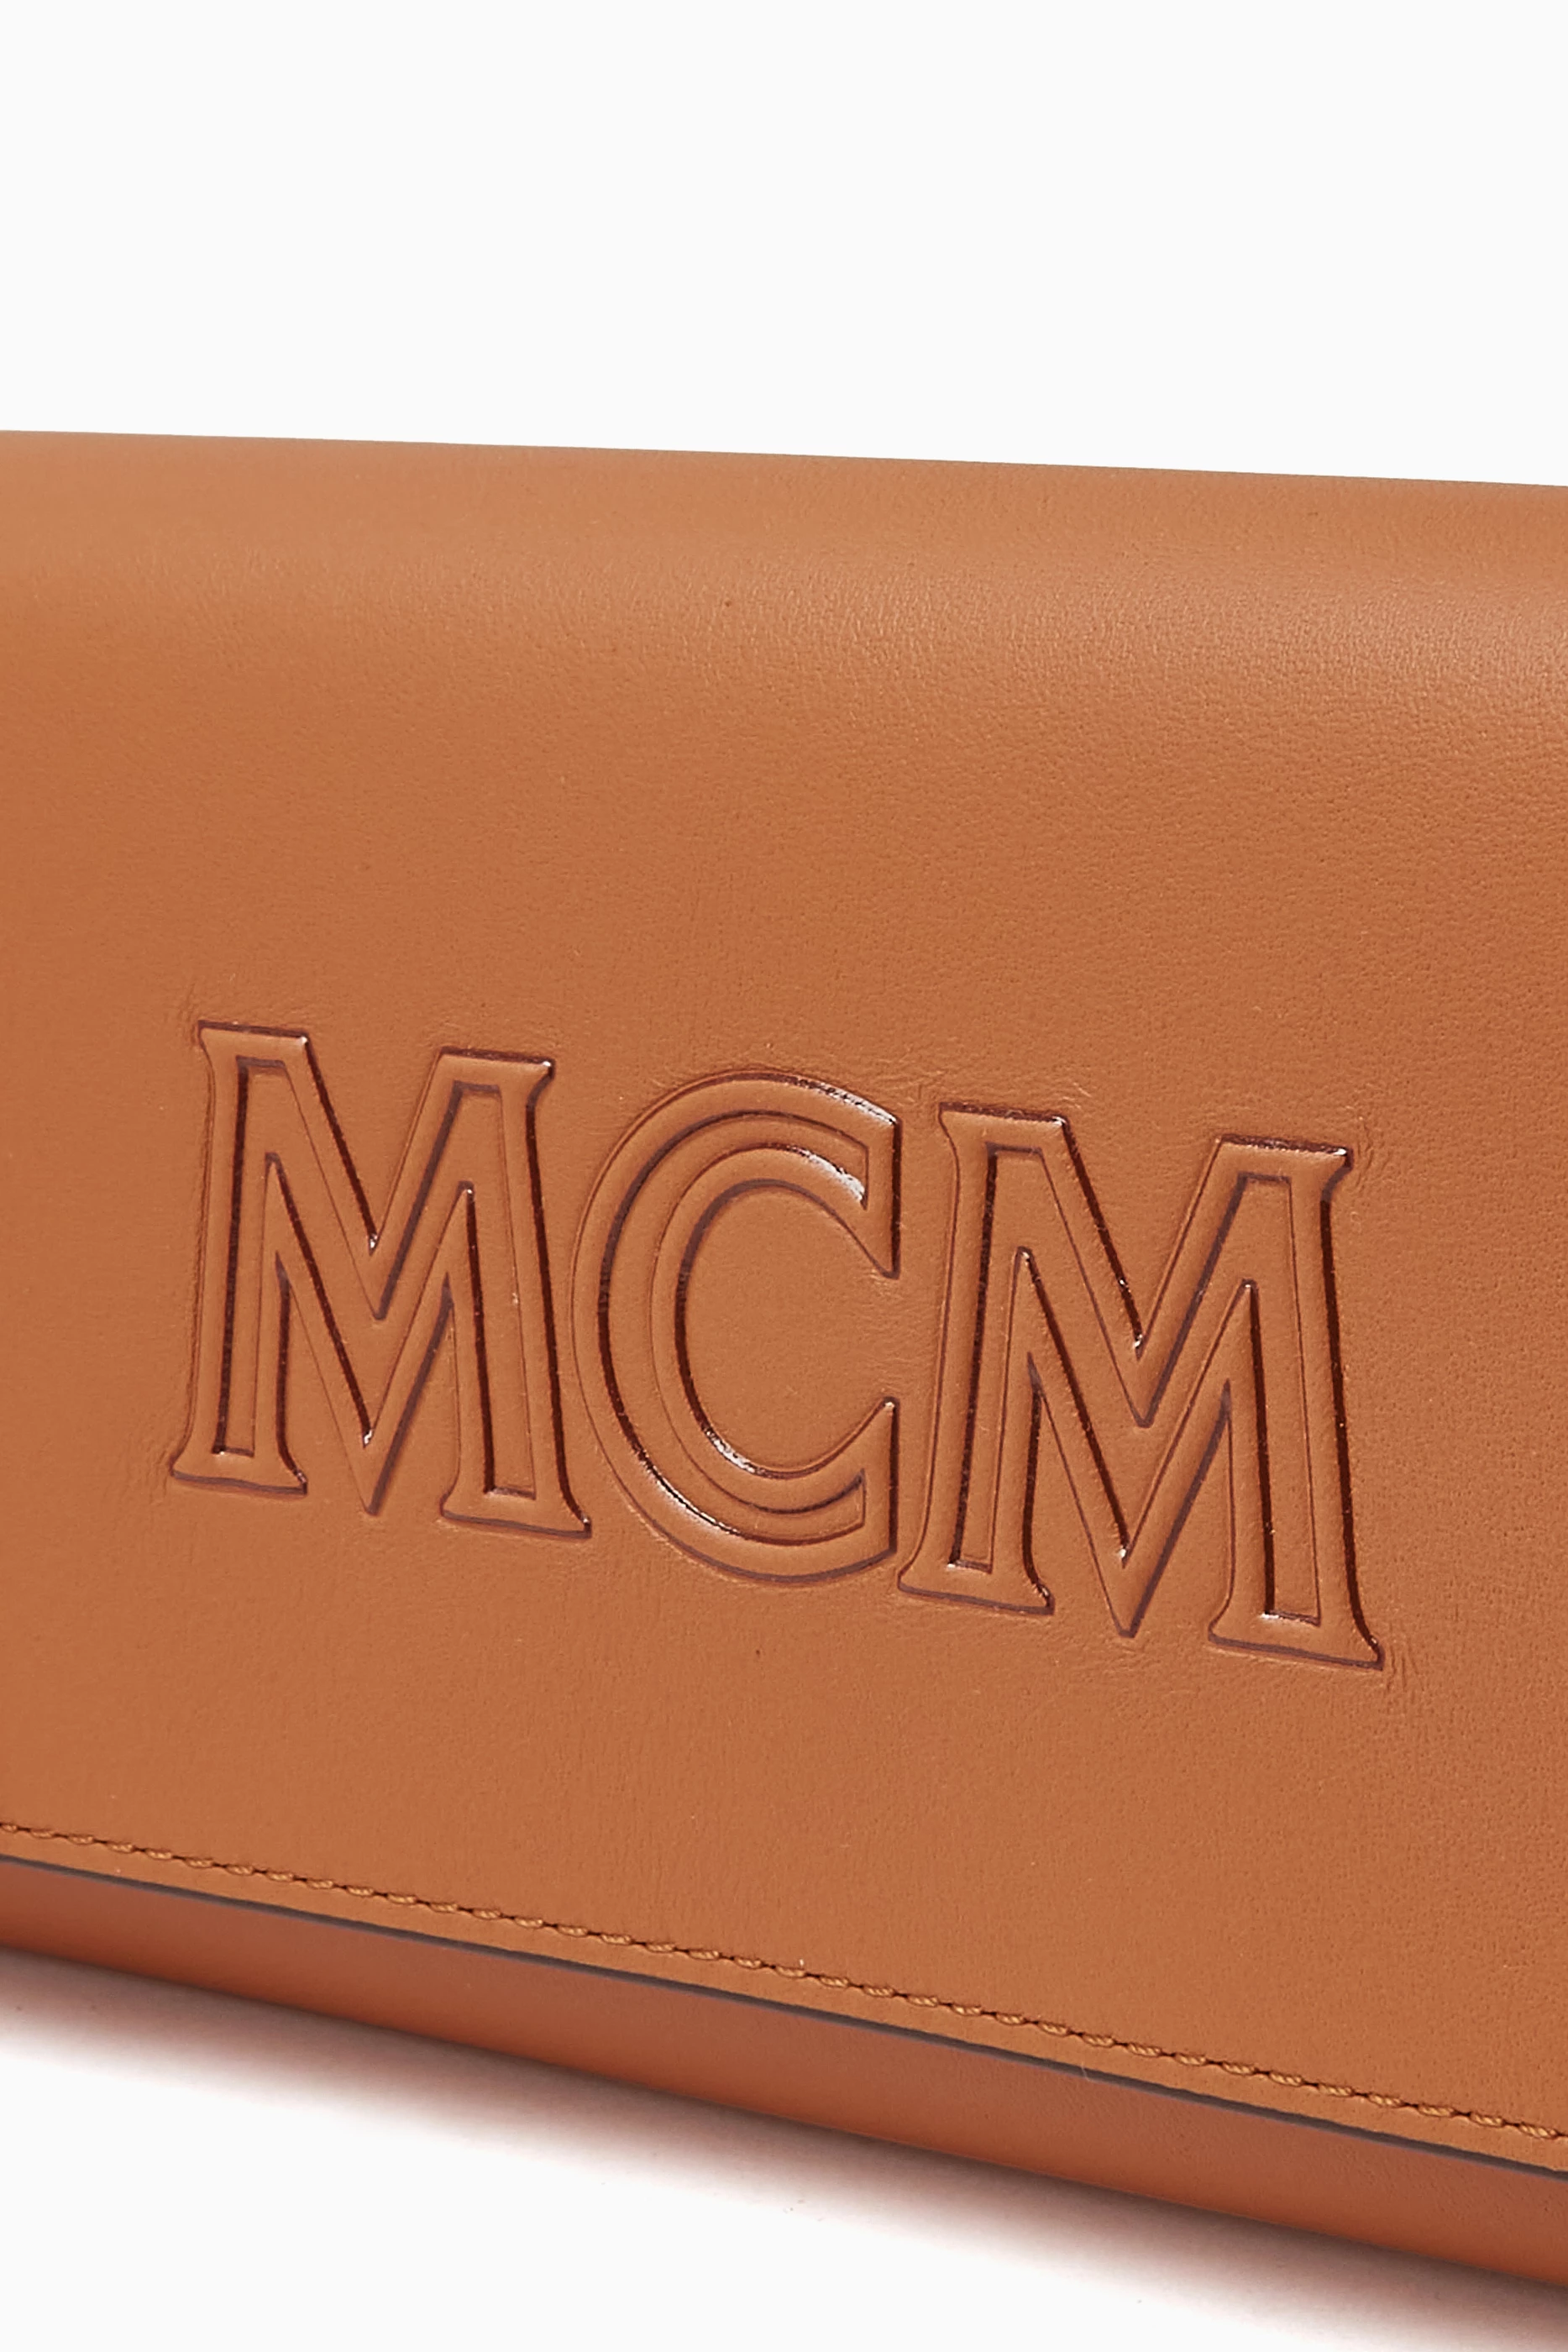 MCM Small Aren wallet for Men - Brown in UAE